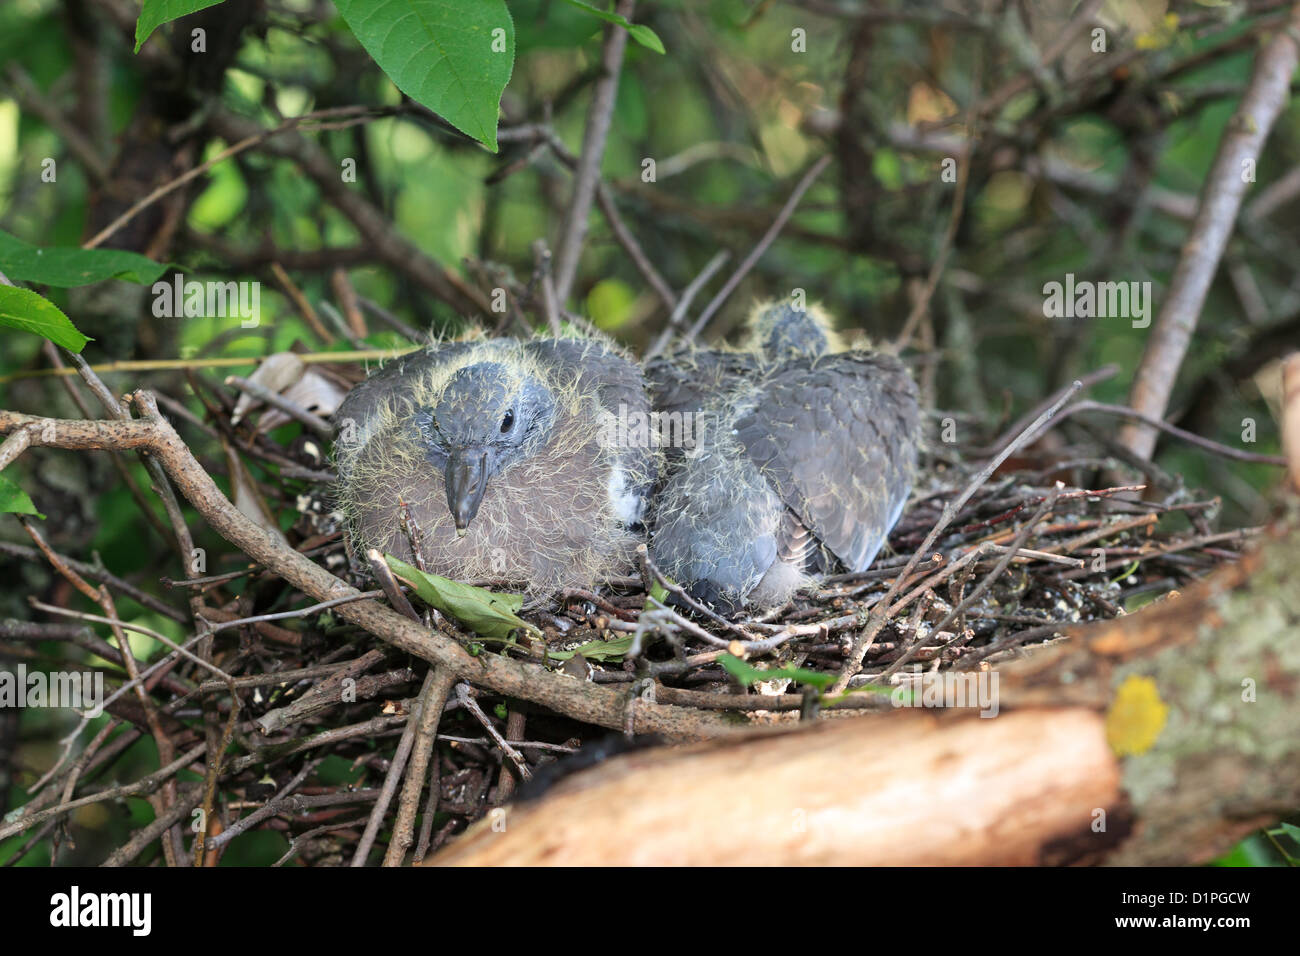 Columba palumbus, Woodpigeon. Nest of a bird with baby birds in the nature. Stock Photo